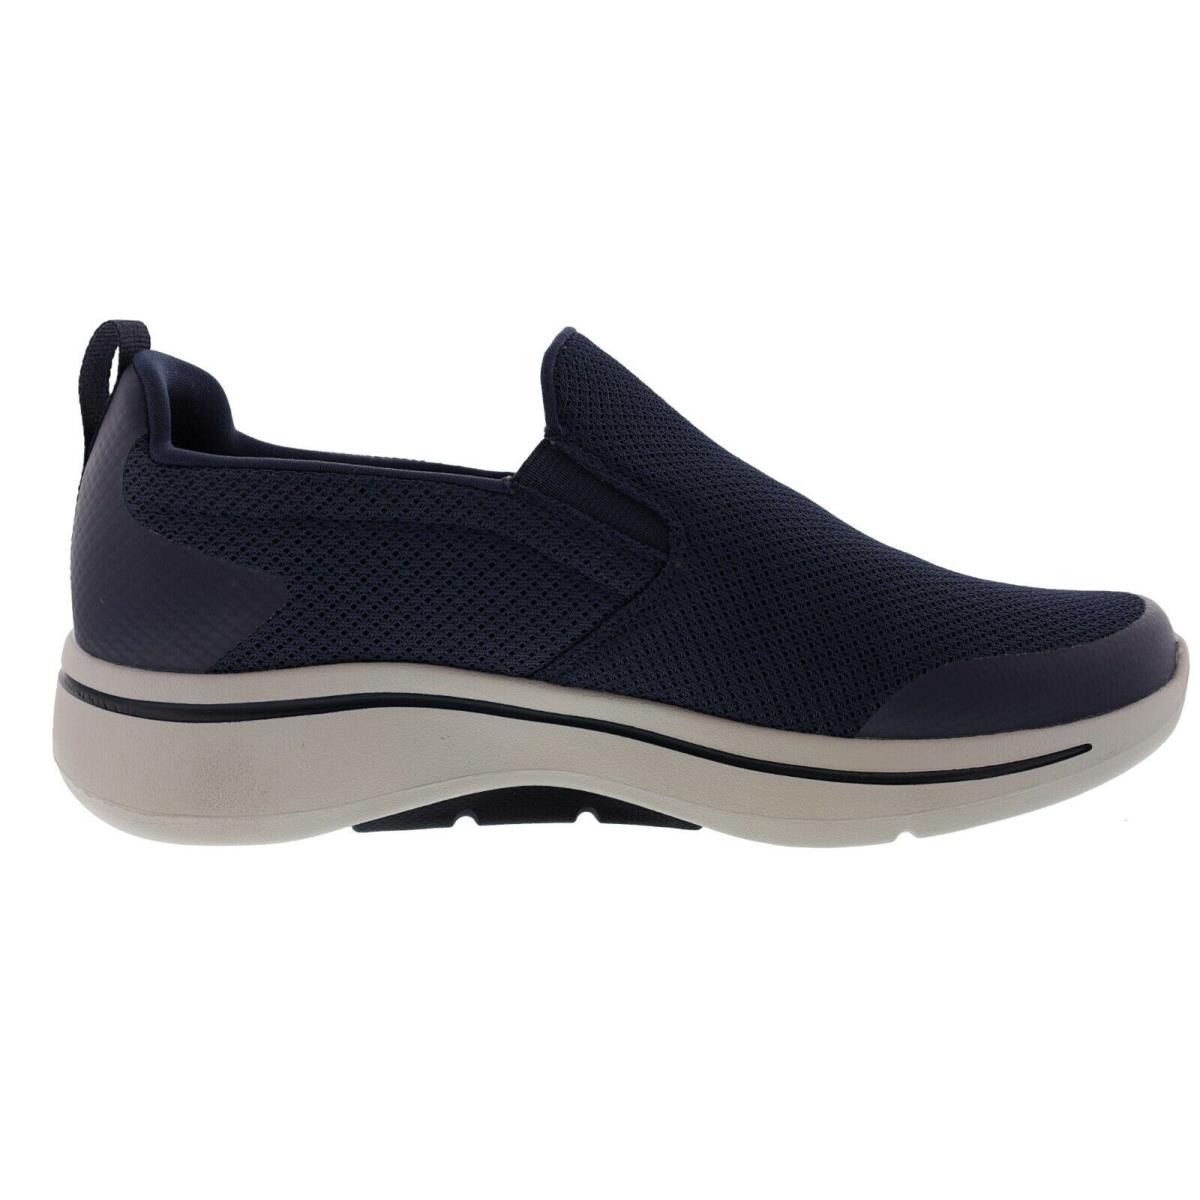 Skechers shoes WALK ARCH - NAVY / GREY 0